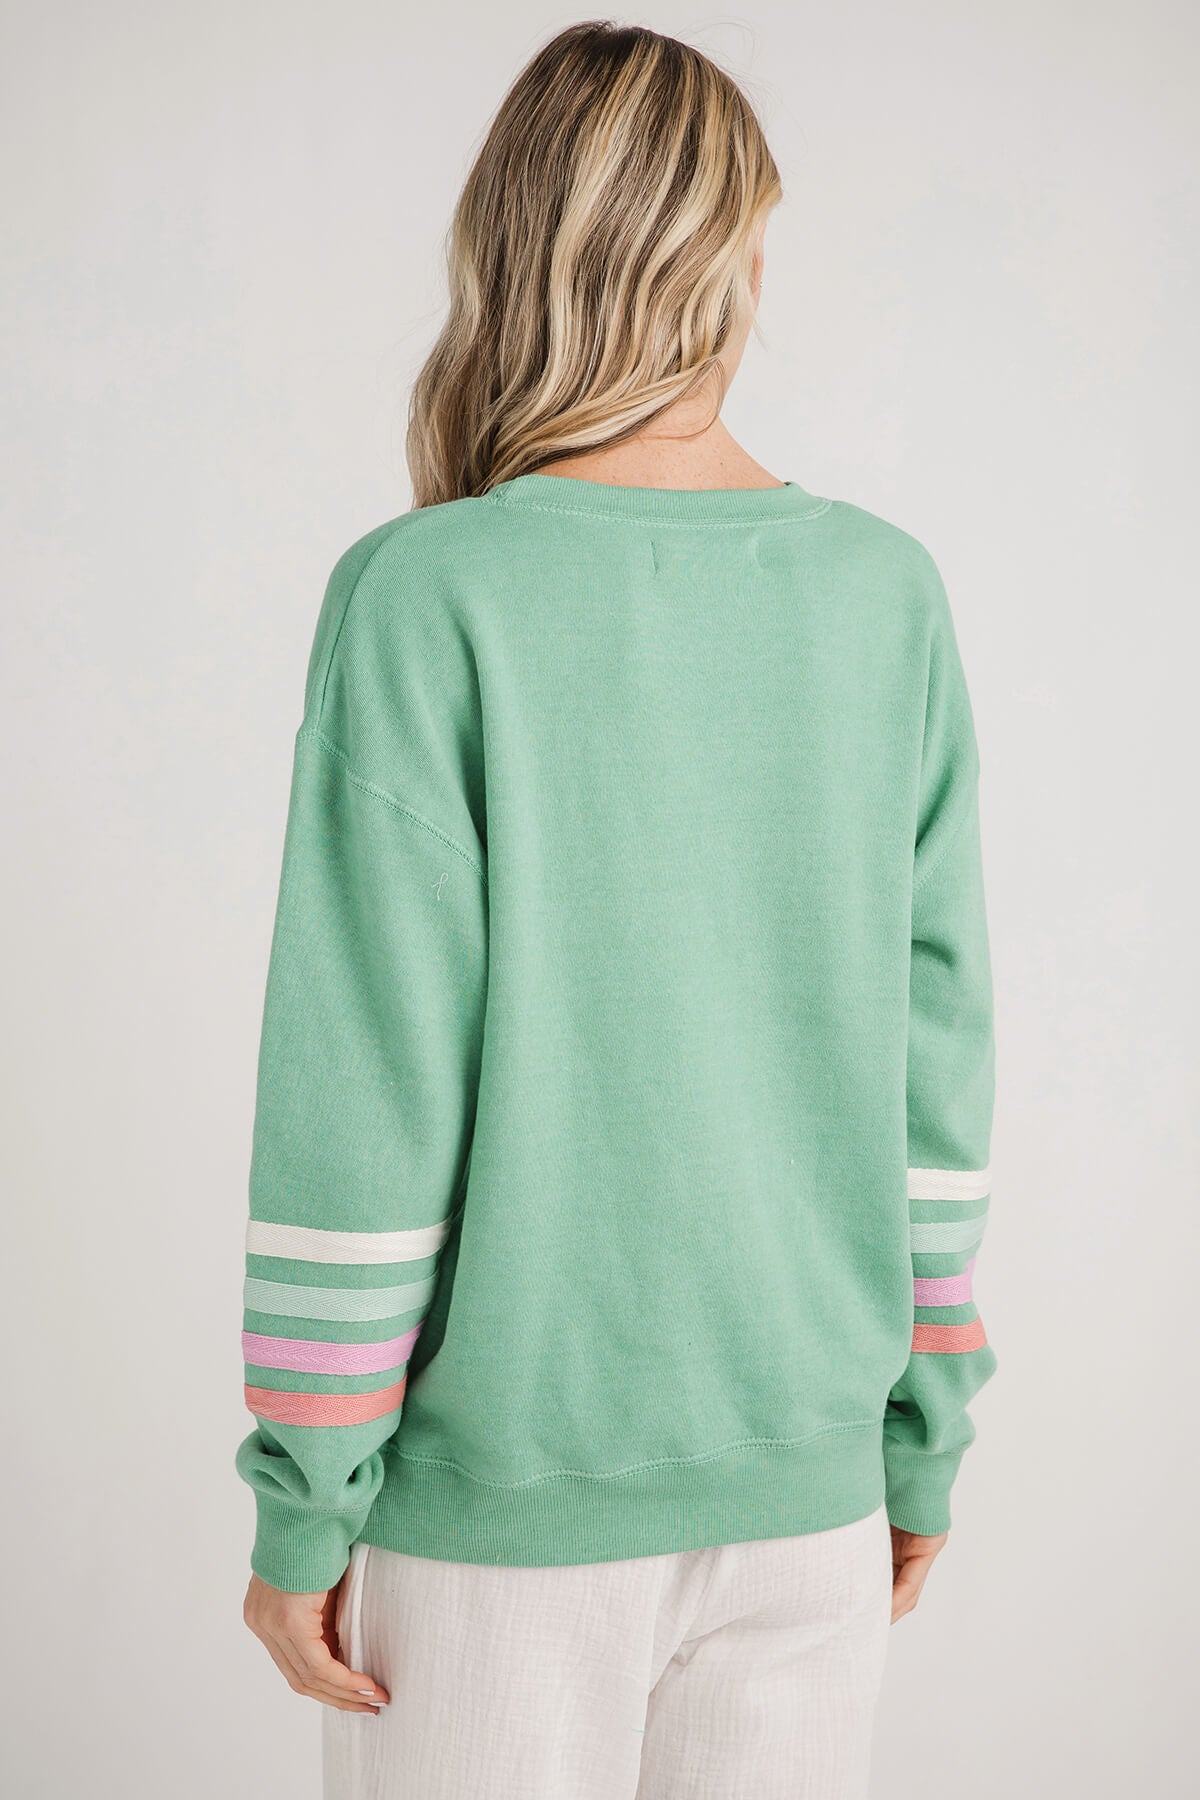 Ocean Drive Colorpop Stripe Sweatshirt